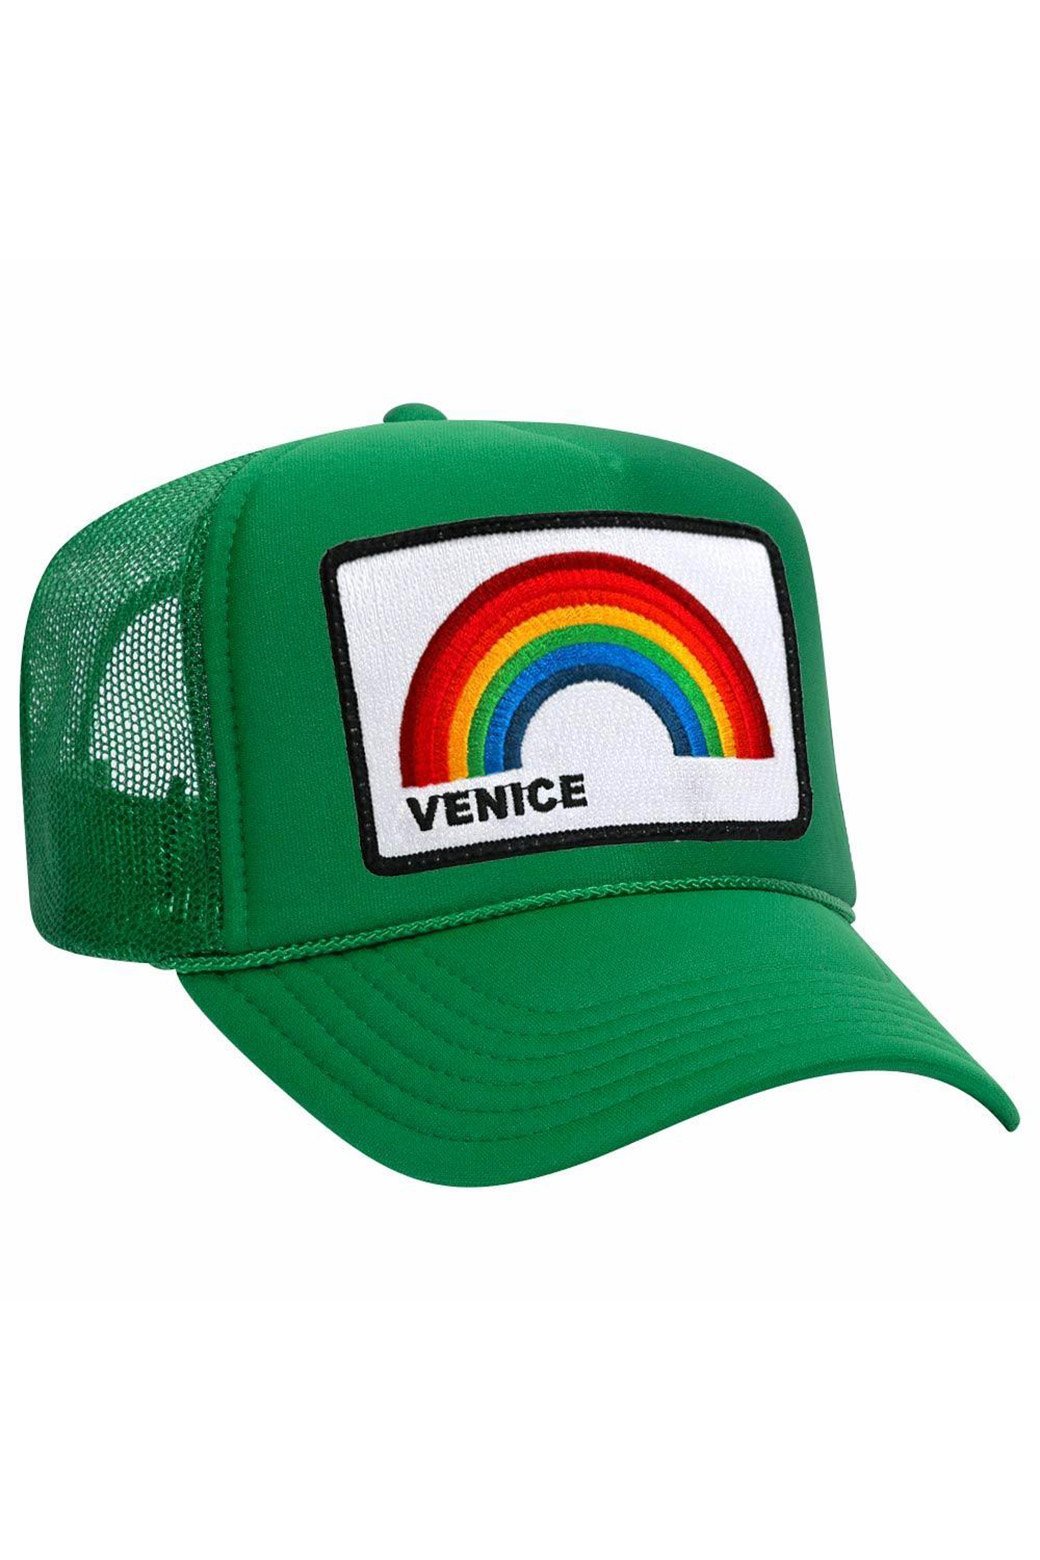 VENICE RAINBOW TRUCKER HAT HATS Aviator Nation OS KELLY GREEN 